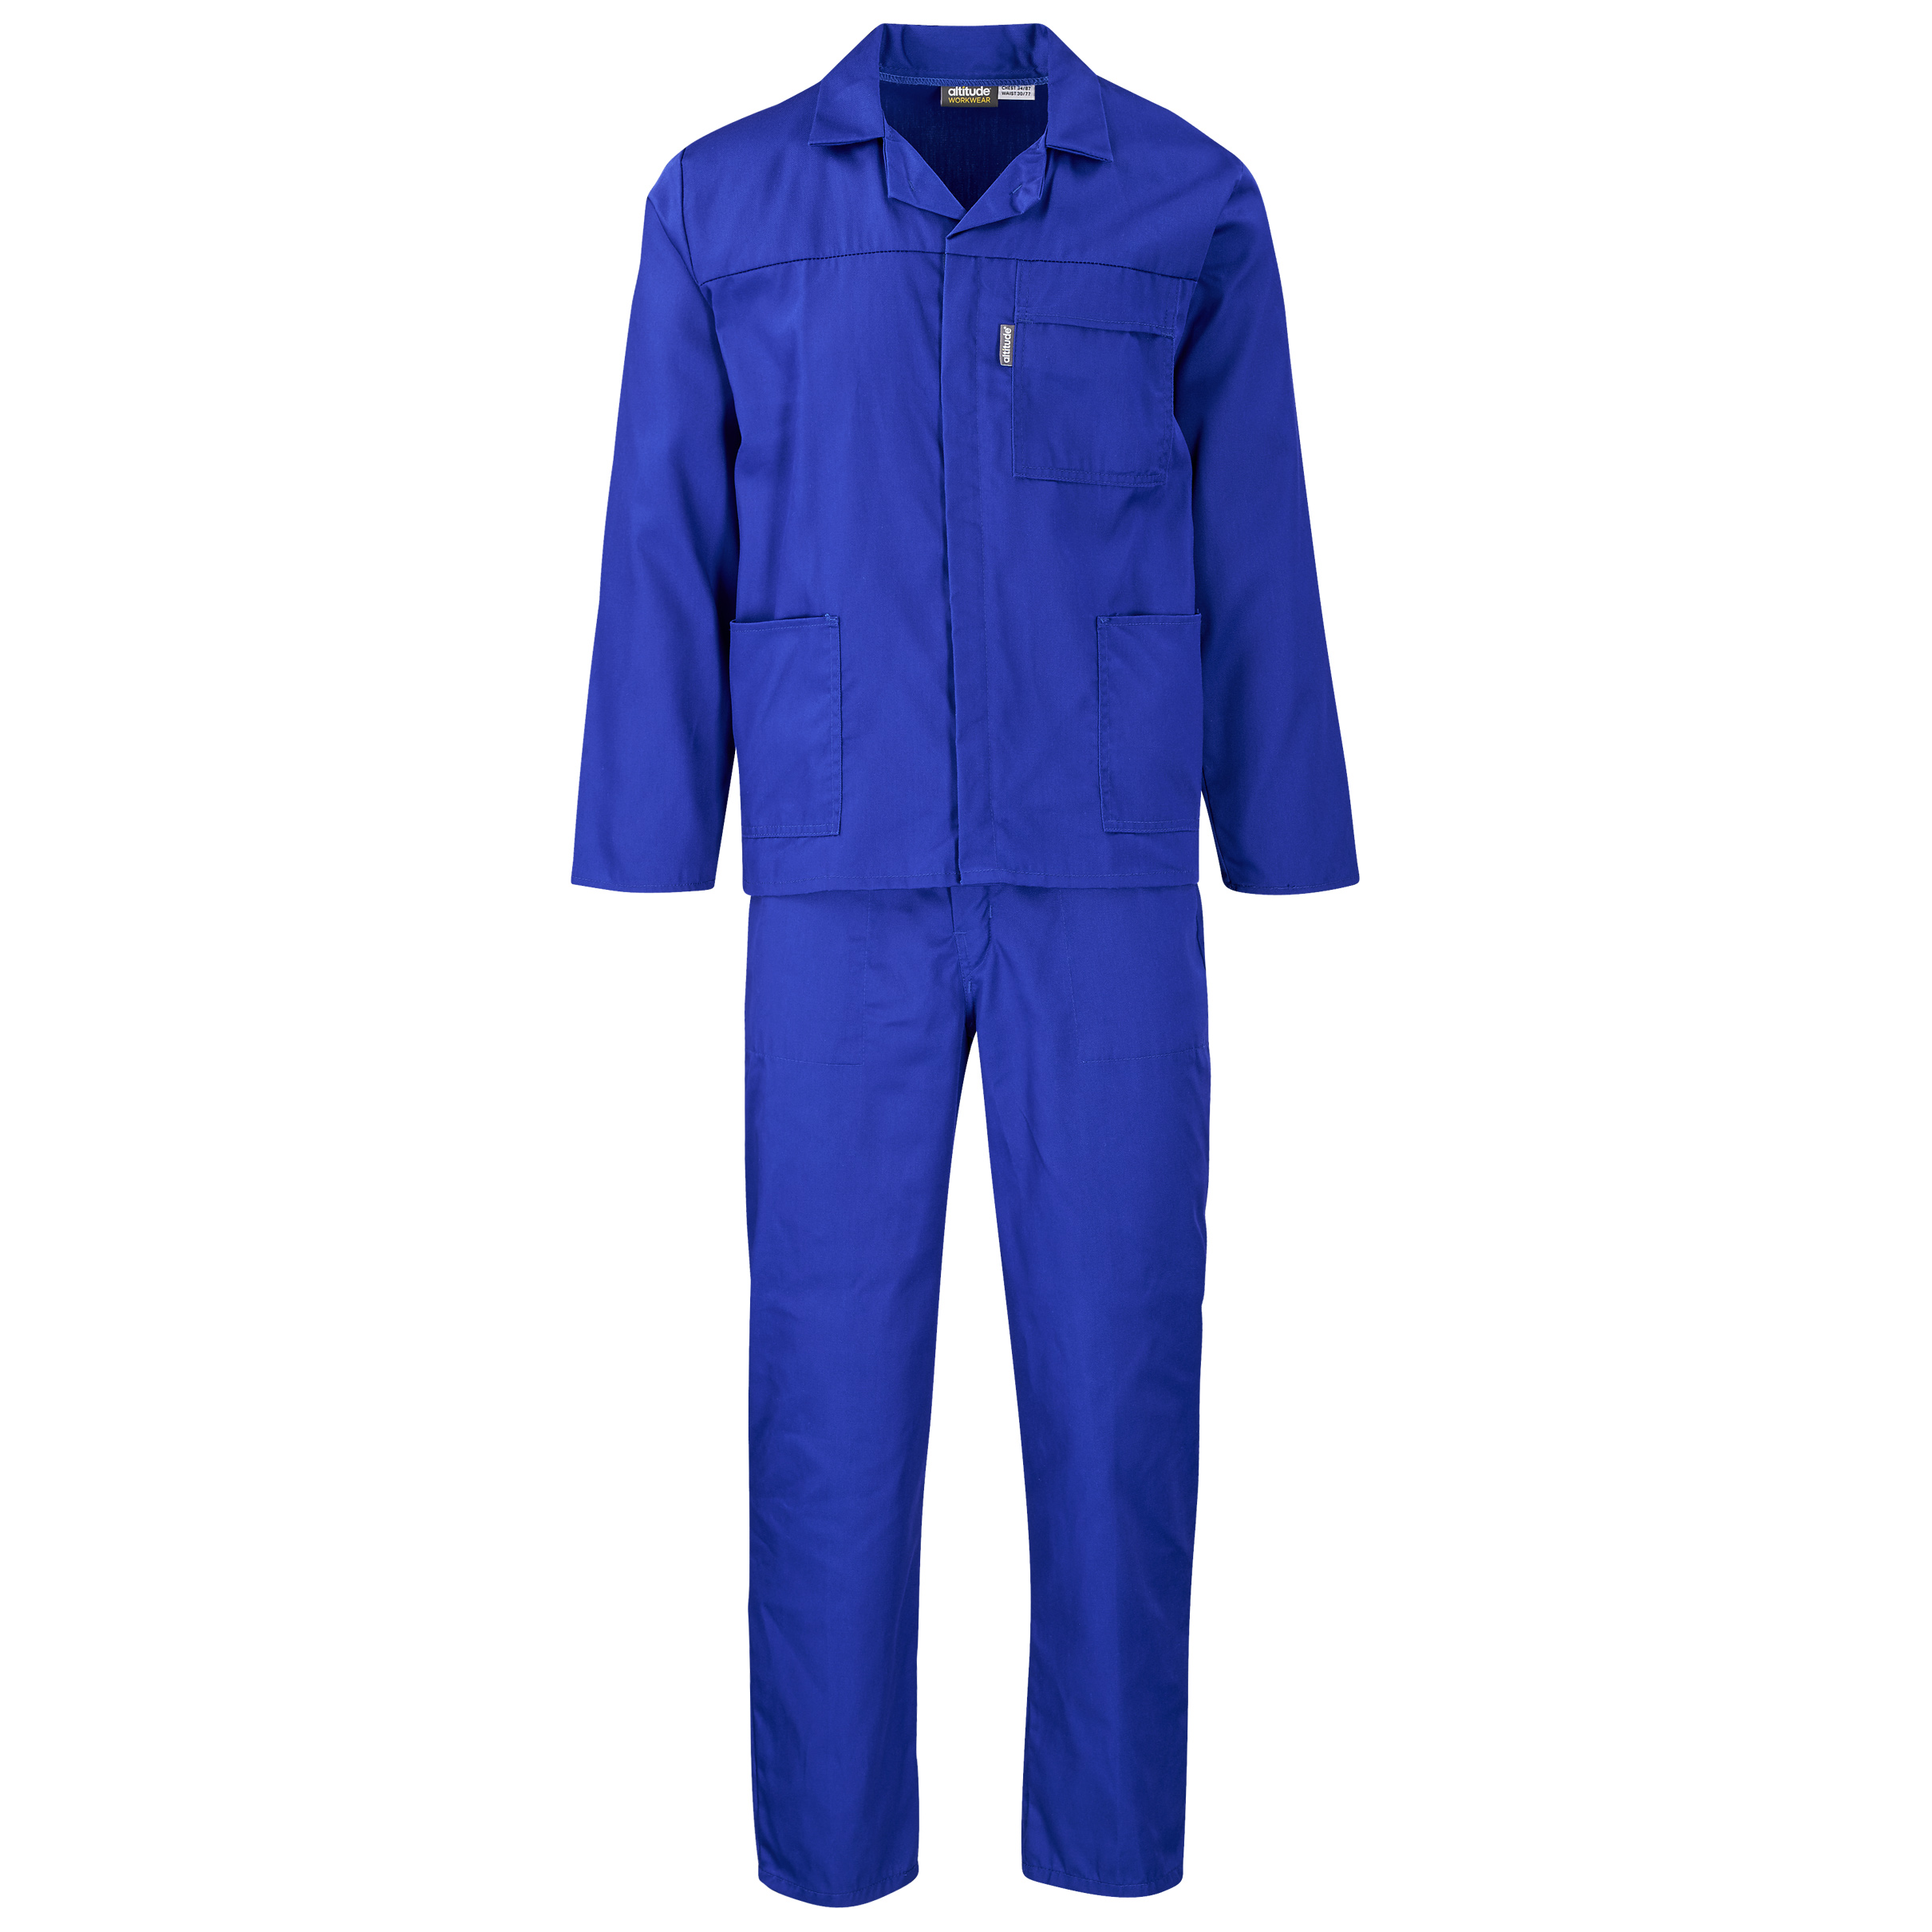 Trade Polycotton Conti Suit royal blue ALT-1101-RB_default by brandxellence workwear